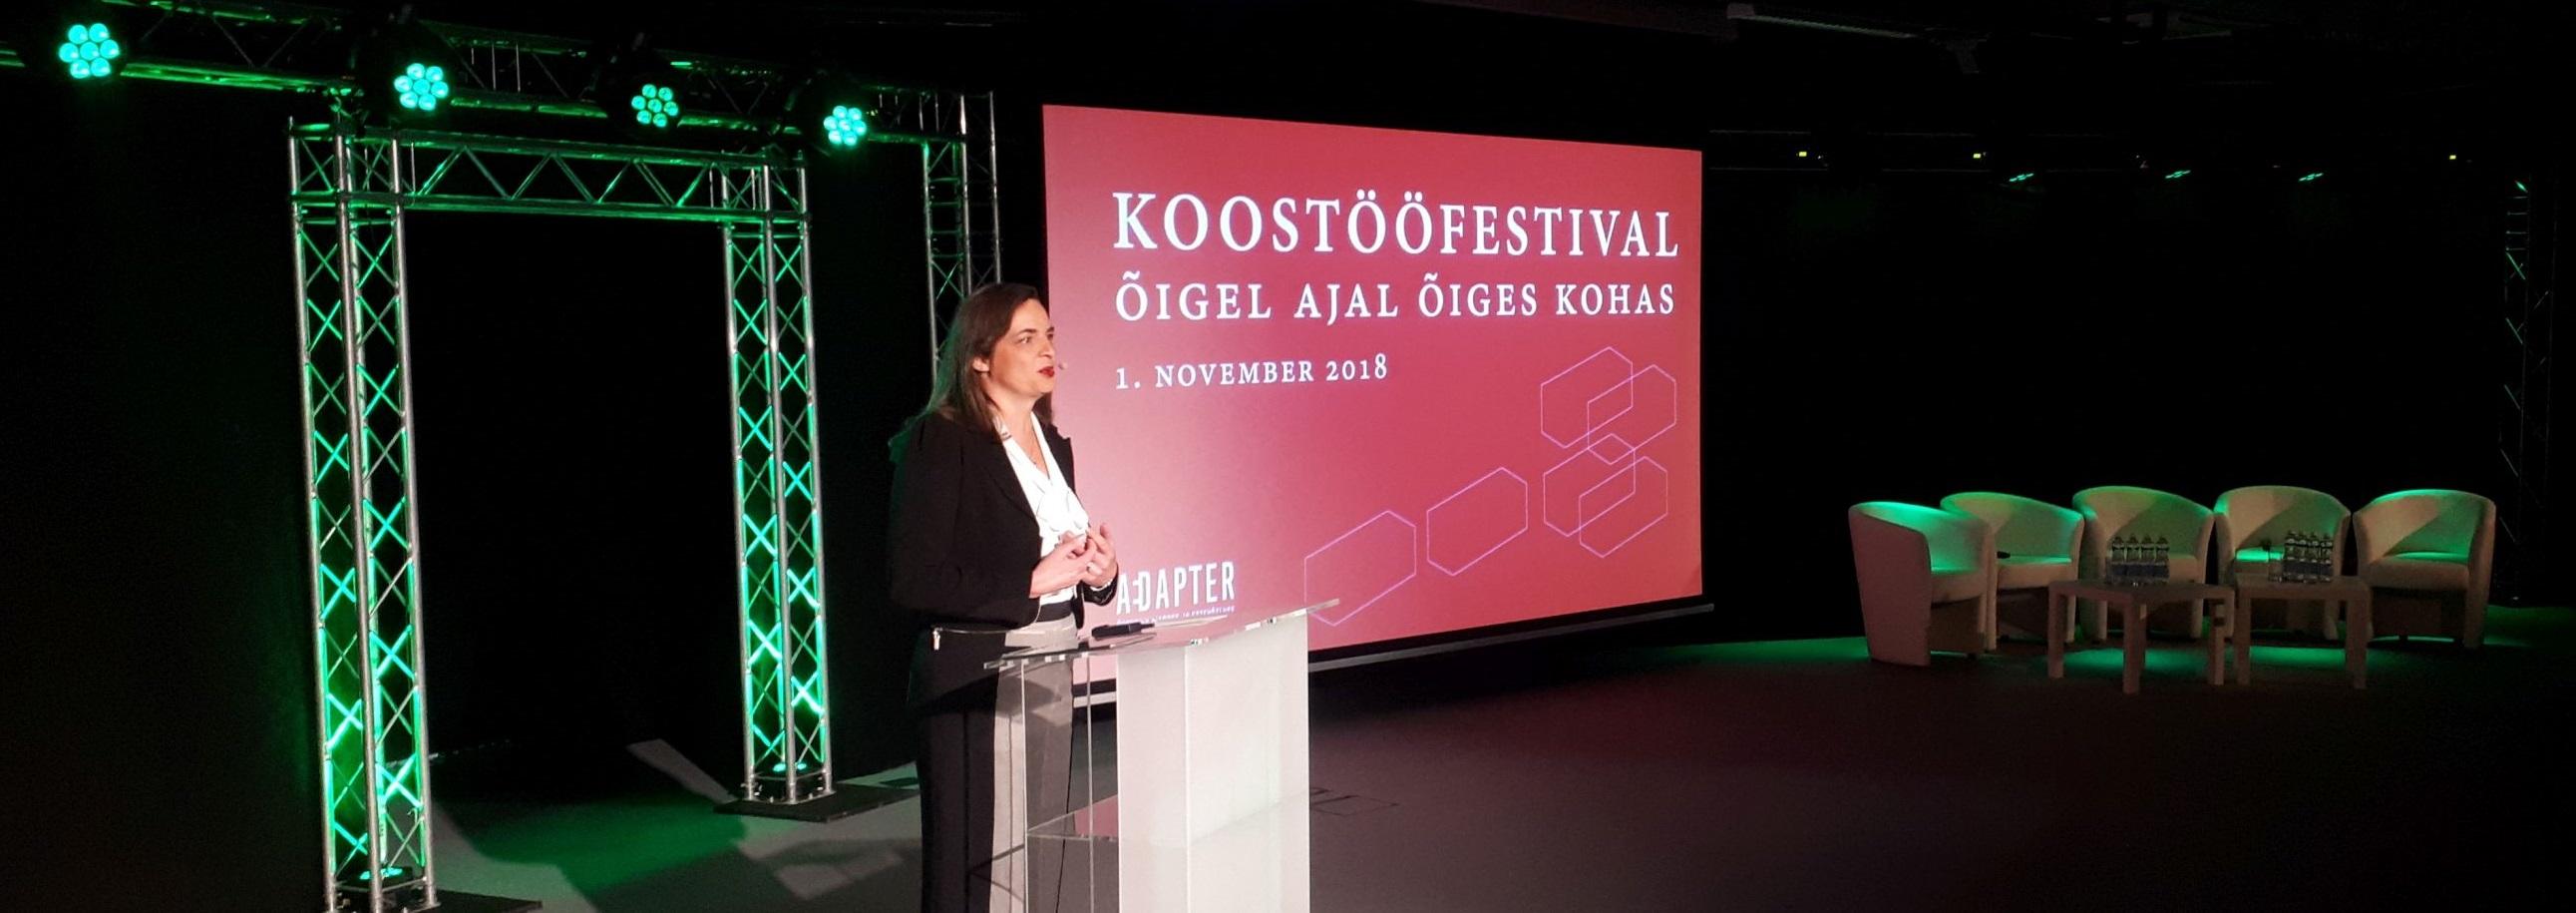 Katrin Niglas festivalil kõnelemas